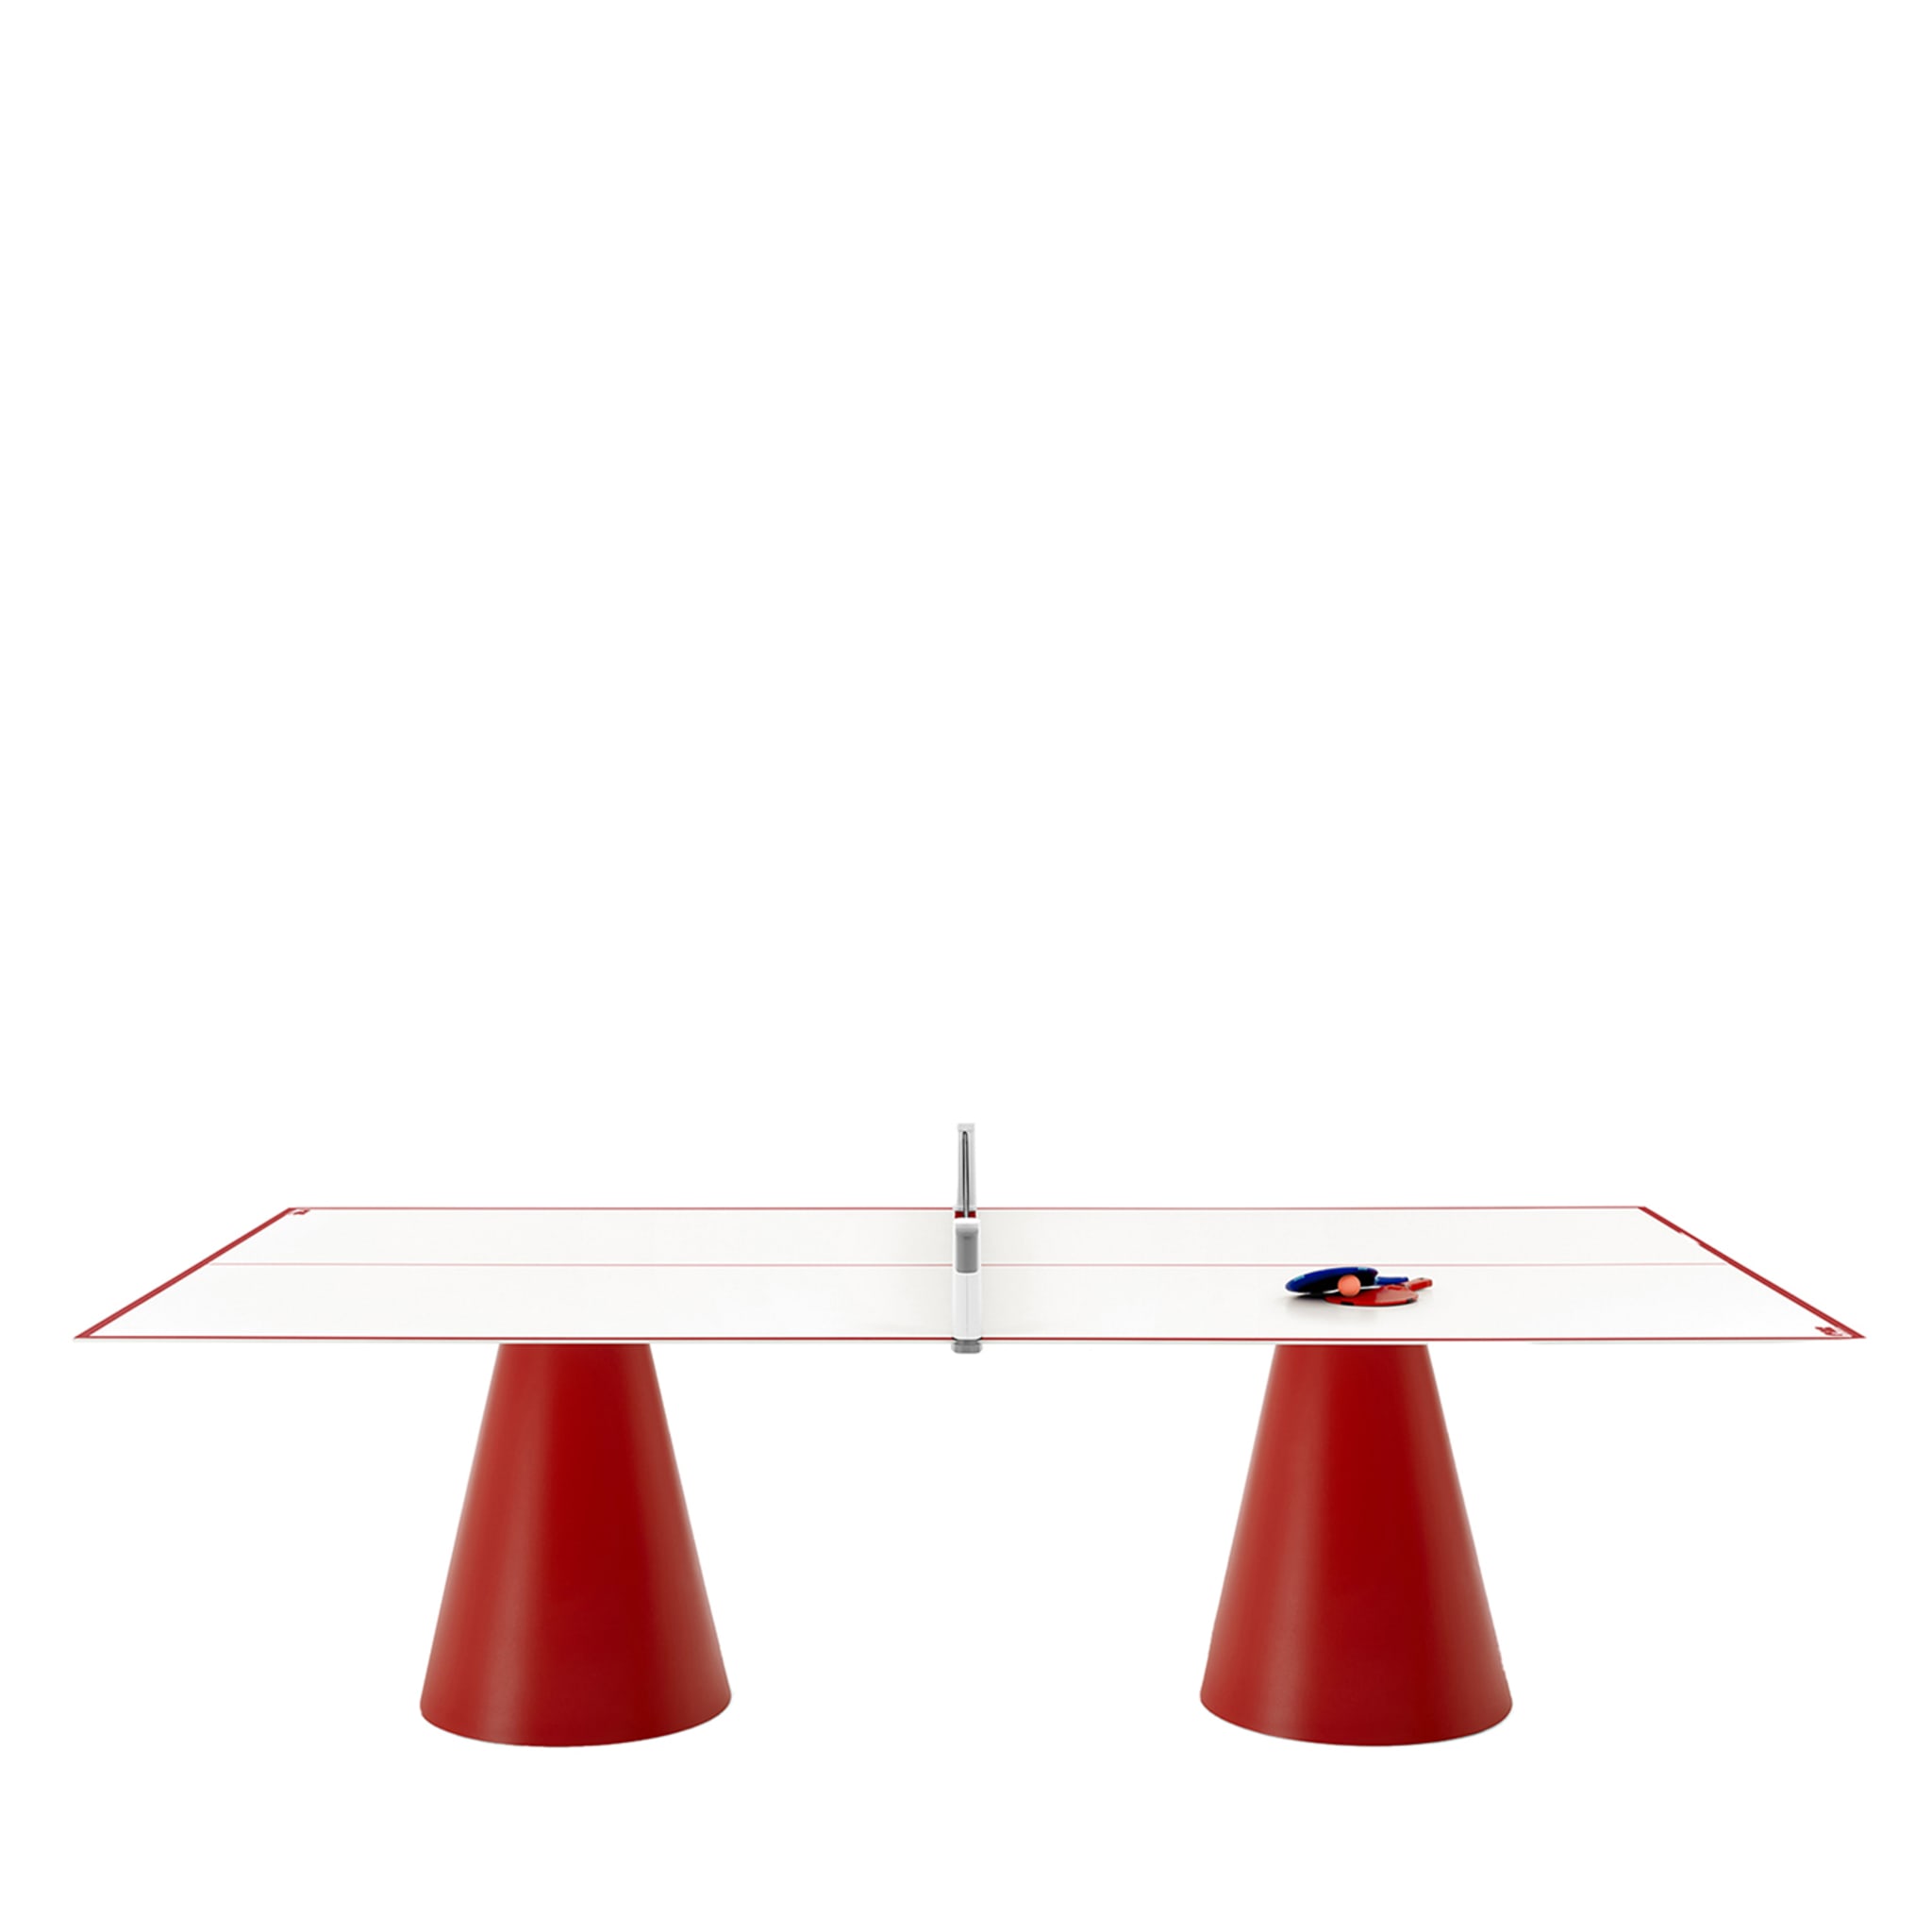 Dada Outdoor Red Ping Pong Table by Basaglia + Rota Nodari - Main view